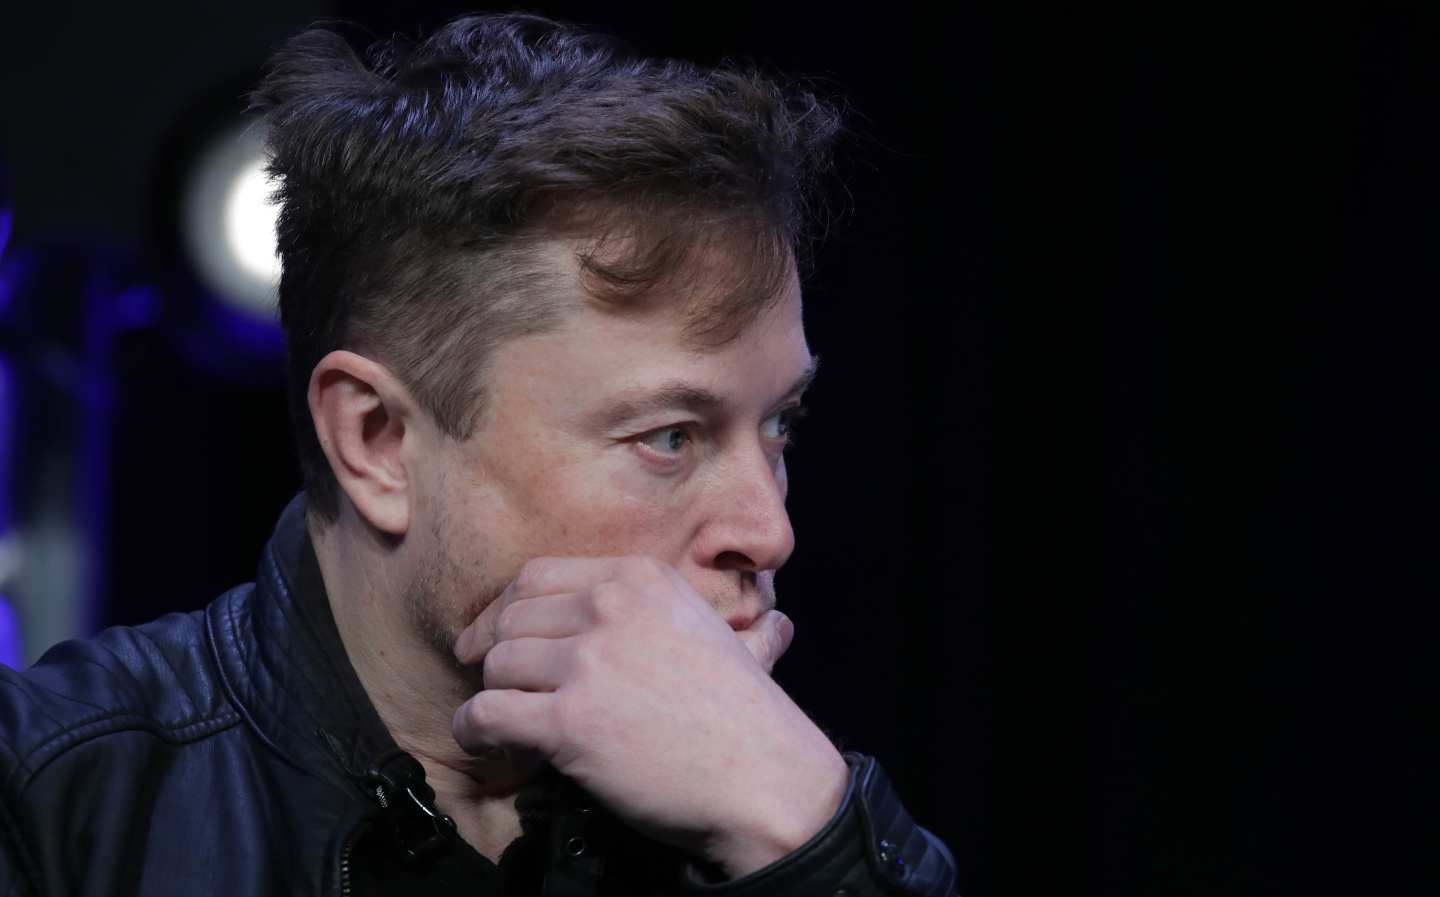 Elon Musk hits back at reports that Tesla ventilators were never delivered to hospitals